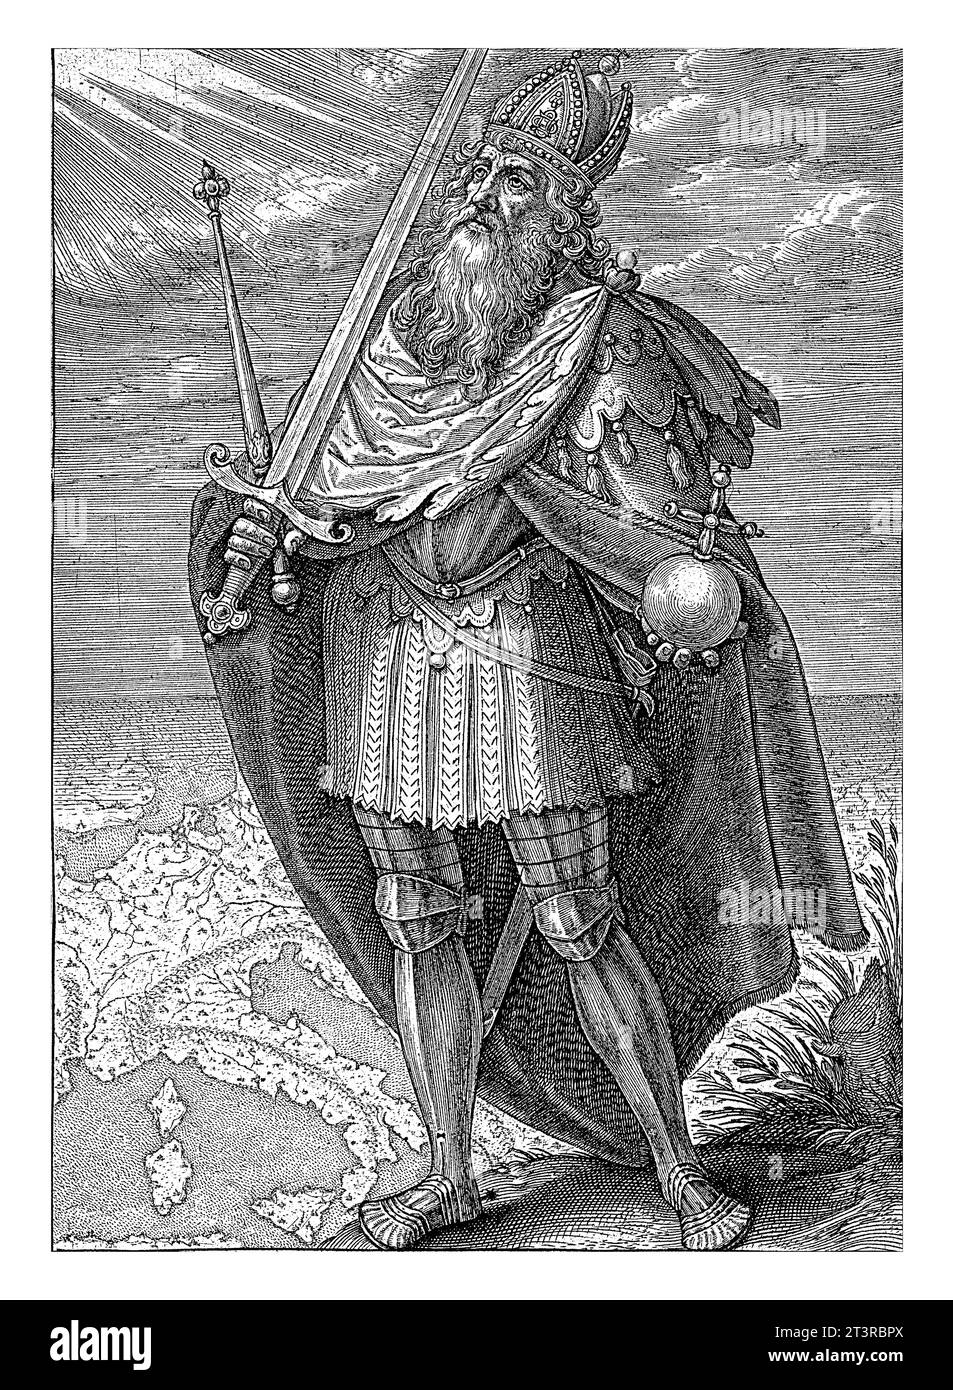 Paesaggio con Carlo Magno, Hieronymus Wierix, 1563 - prima del 1619 paesaggio con l'imperatore Carlo Magno in armatura. Ha una sfera, una spada e un comando Foto Stock